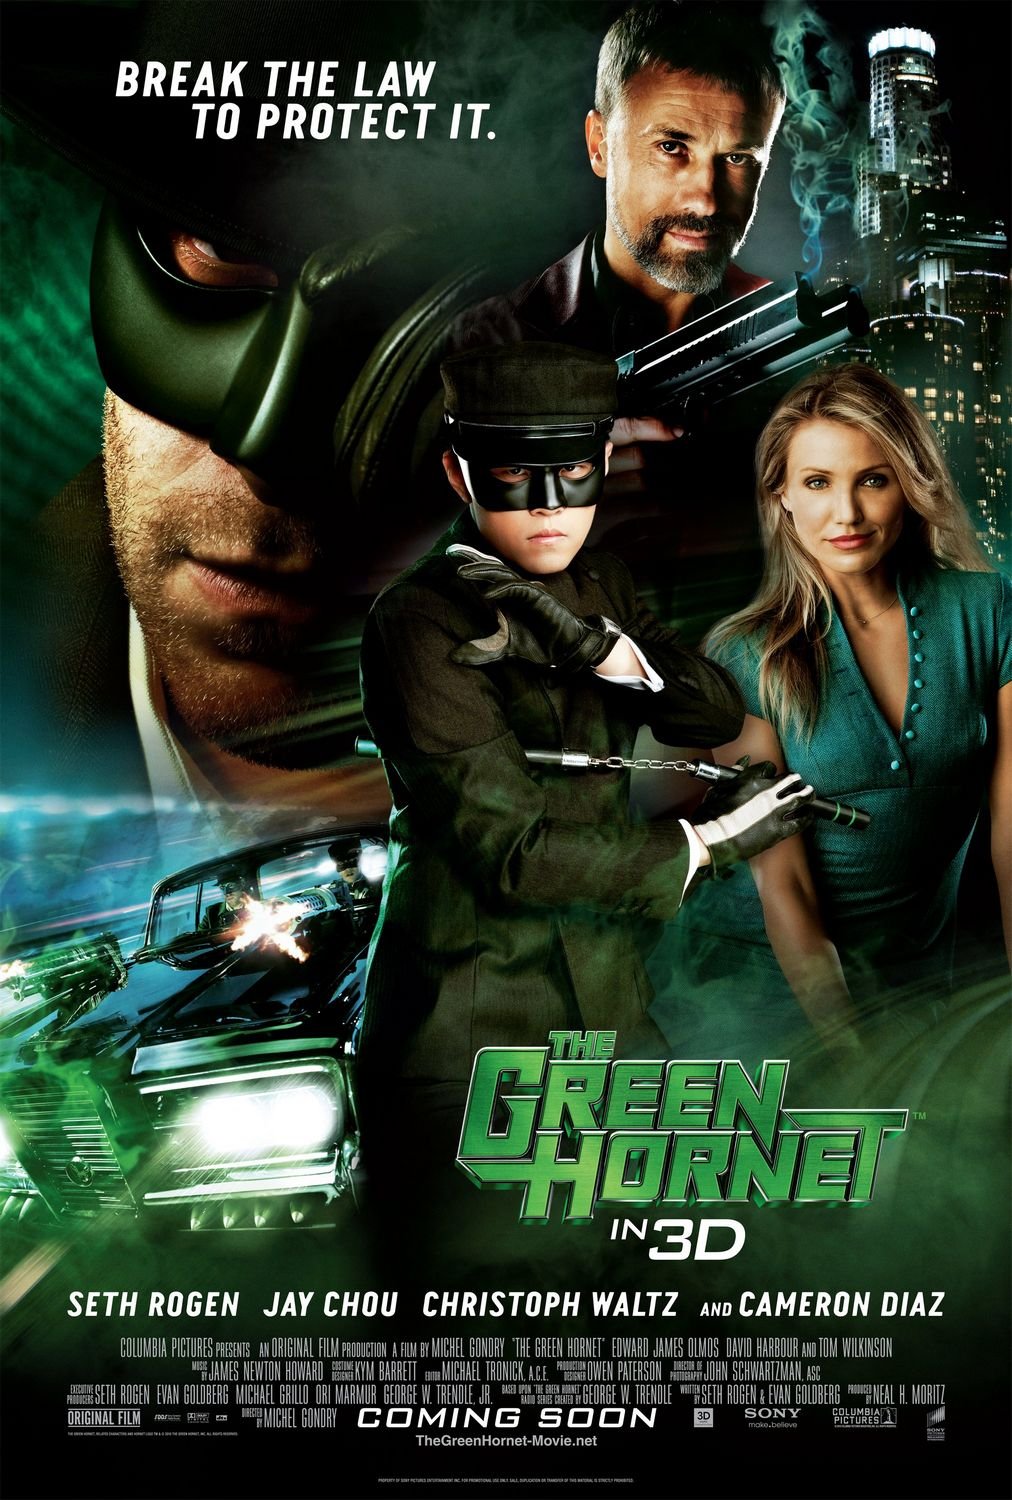 The Green Hornet (2011) 448Kbps 23.976Fps 48.0kHz 6Ch BluRay Tr Audio